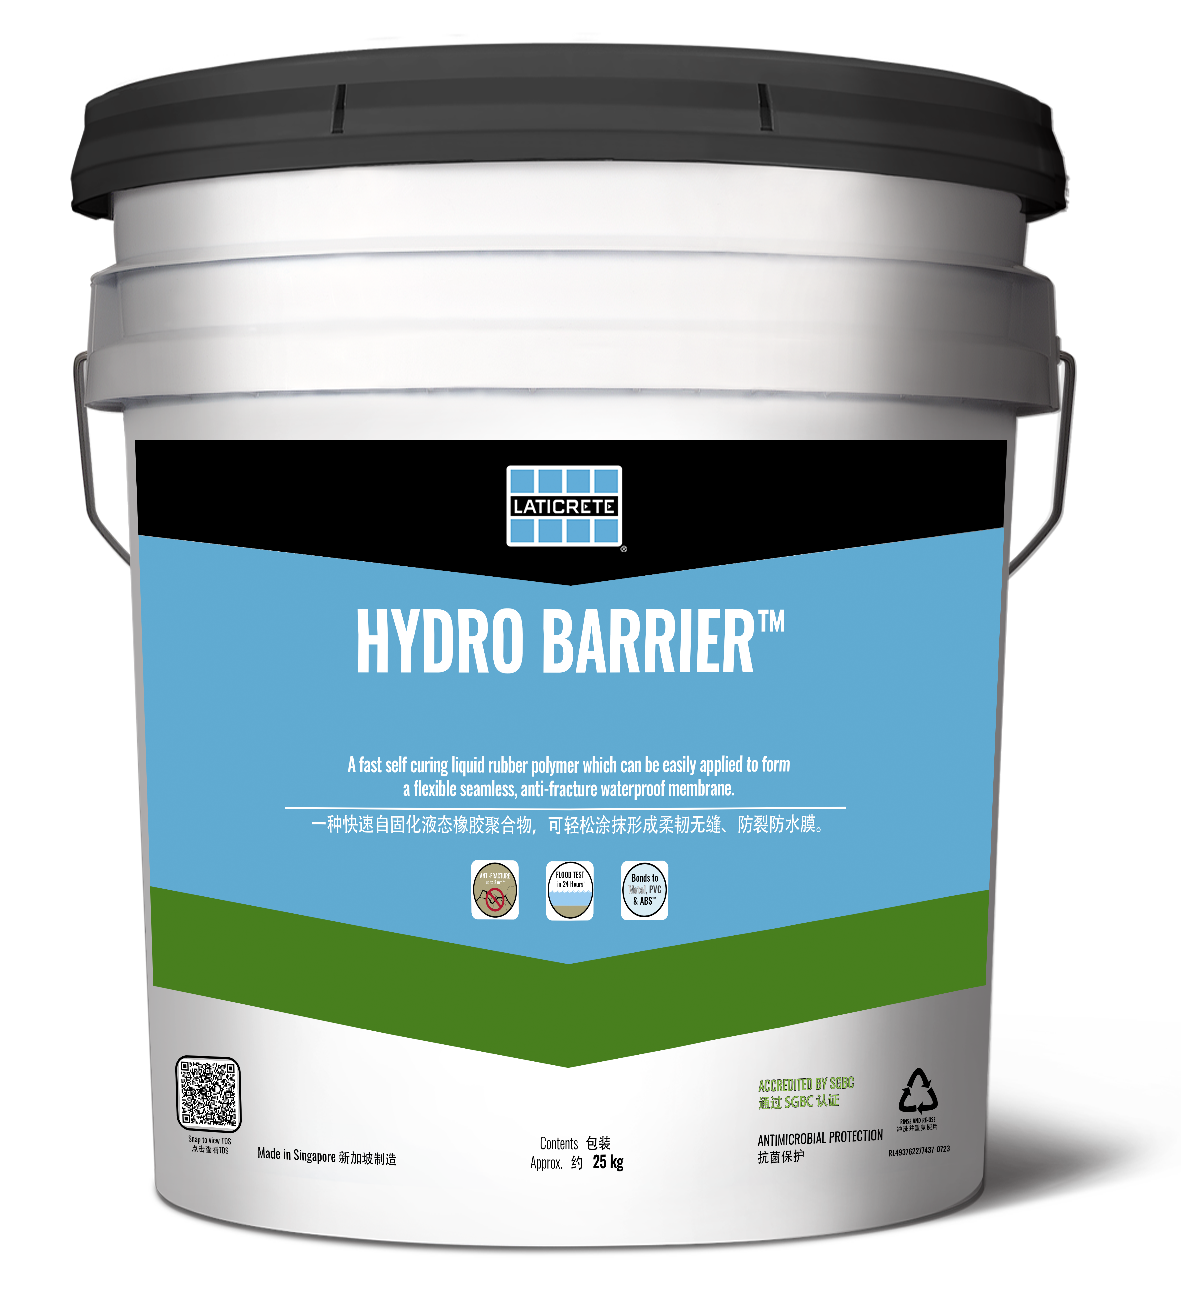 Hydro Barrier Waterproofing Membrane